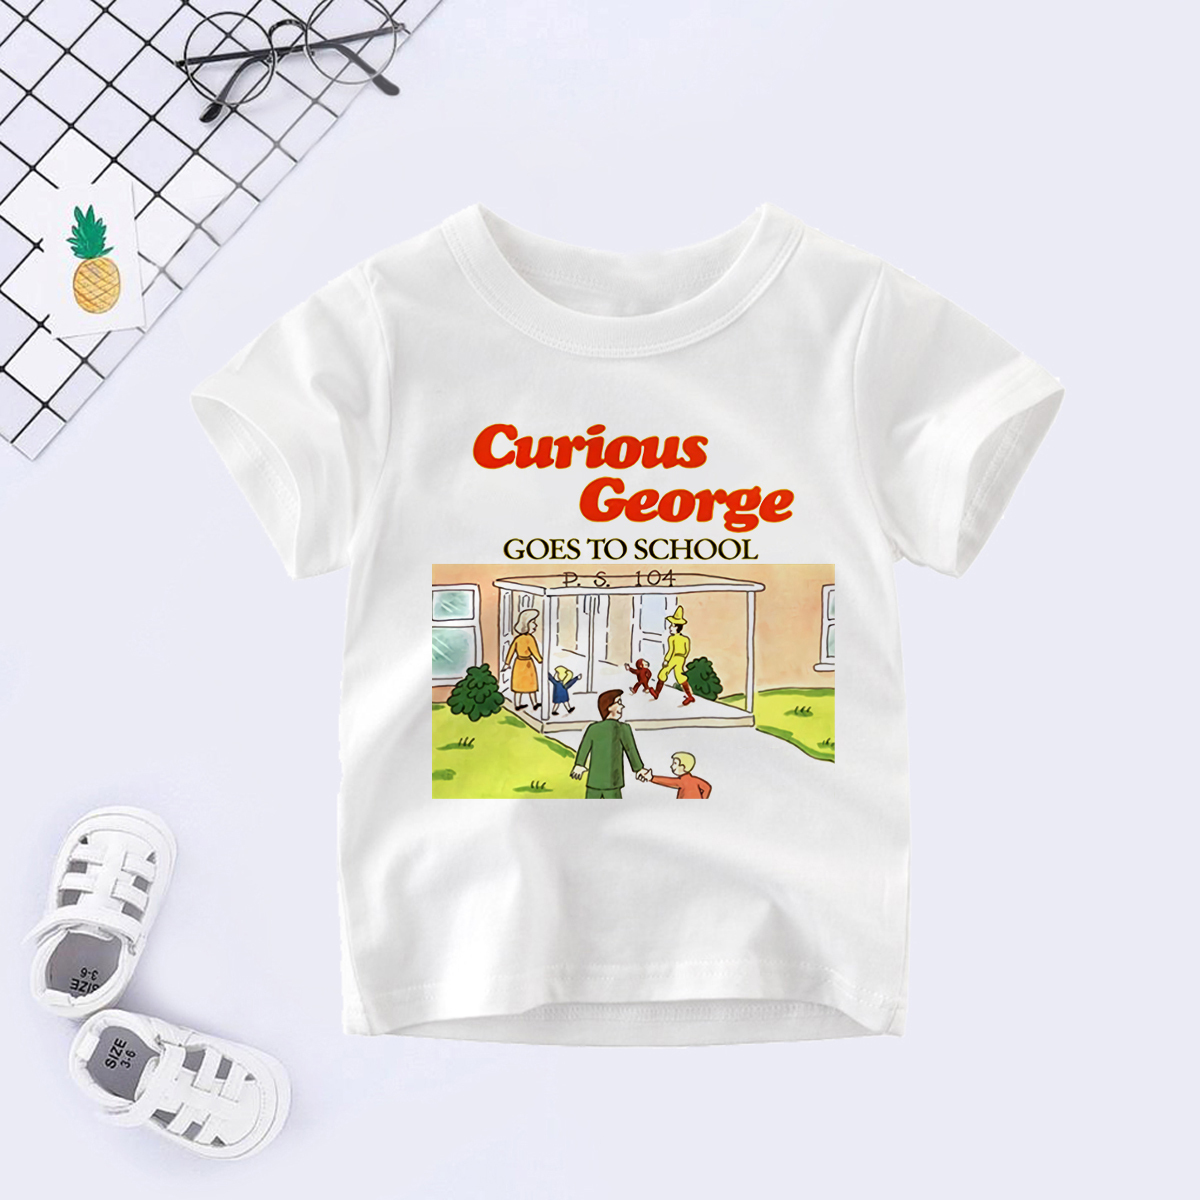 Curious George Go To School Shirt, Curious George Birthday Boy Theme, Curious George shirts, Cute George Birthday tee, back to school tee